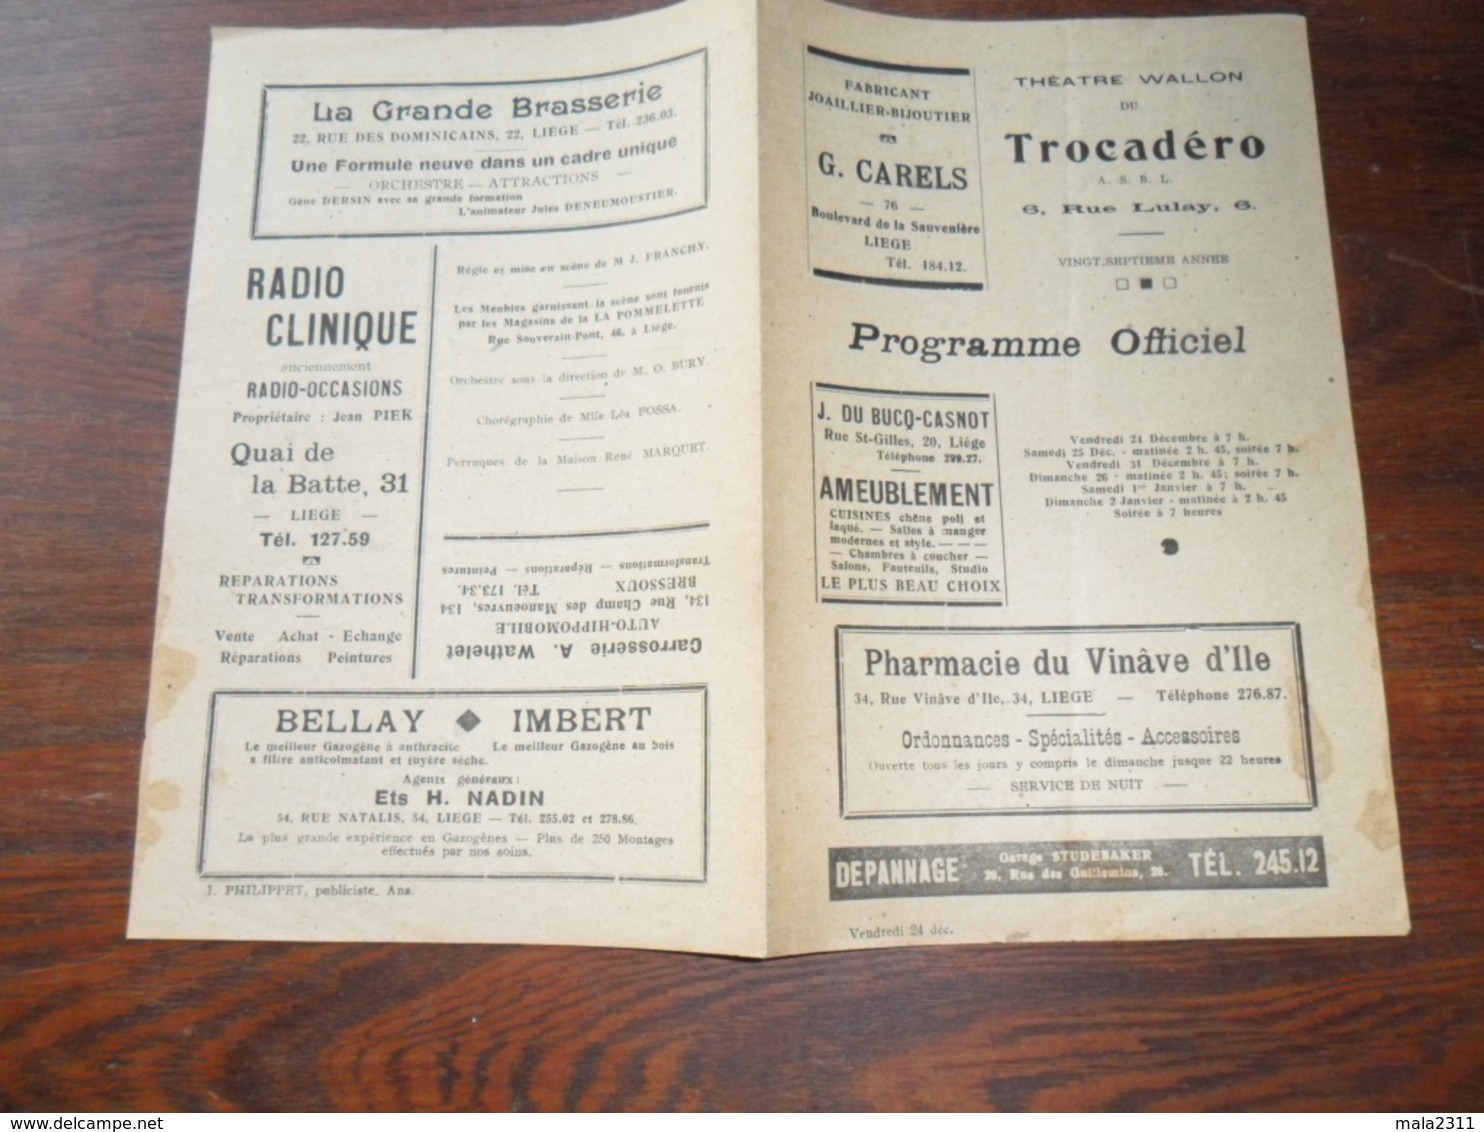 ANCIEN PROGRAMME / THEATRE WALLON DU TROCADERO / 27ième  ANNEE / 1943 - Programmes